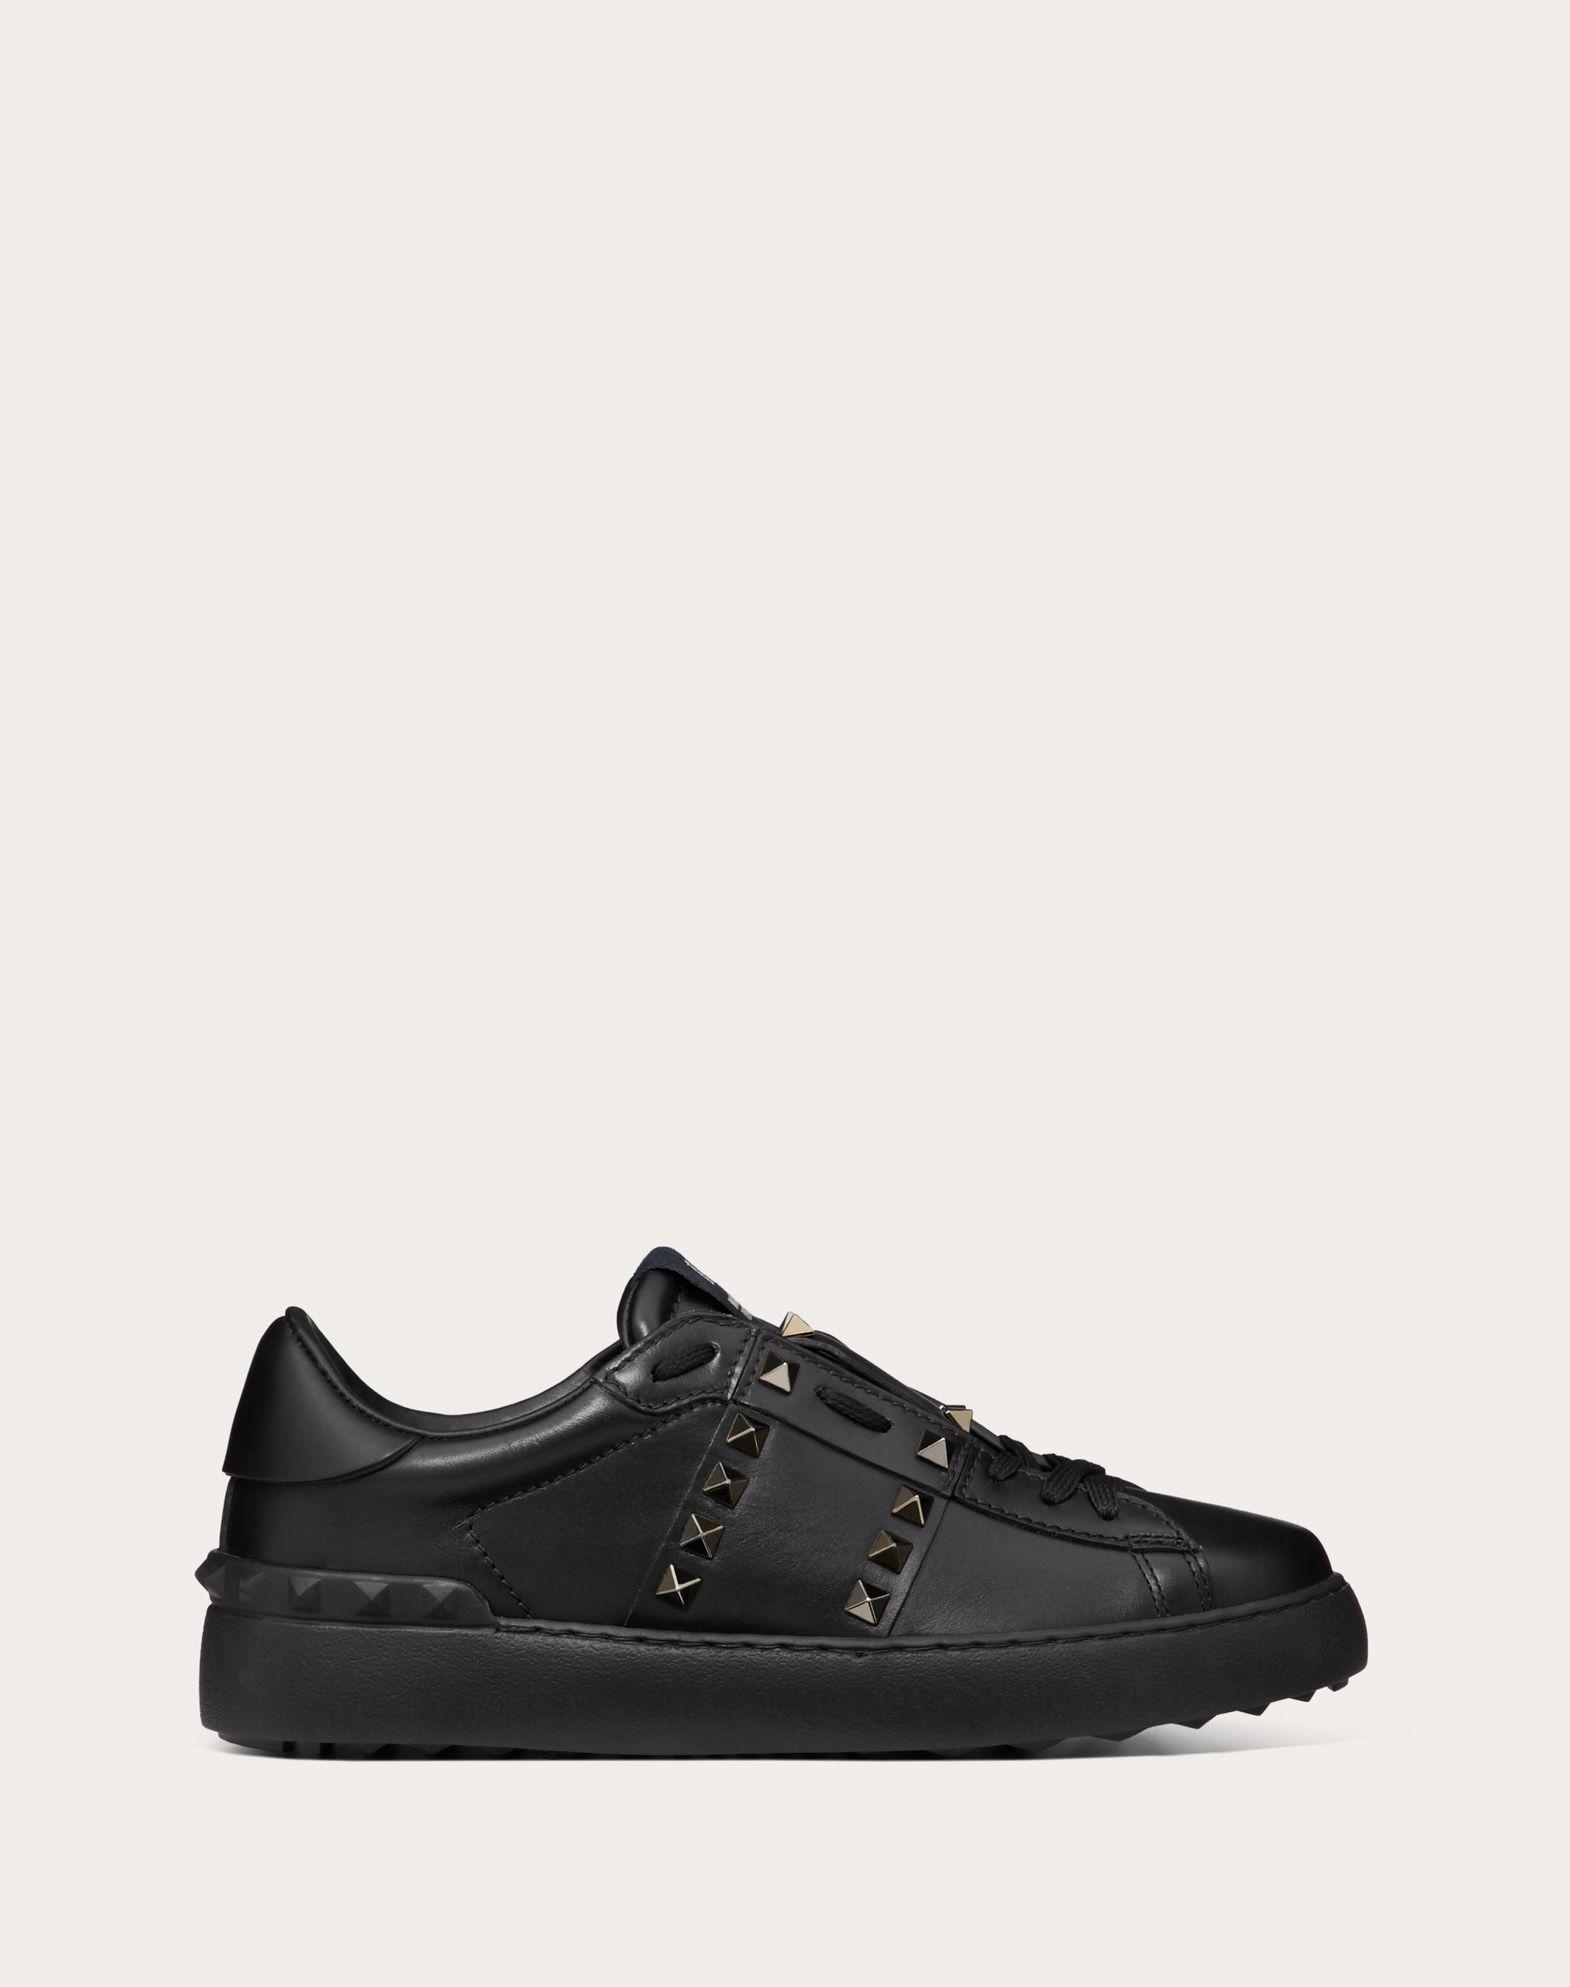 Valentino Garavani Rockstud Untitled Noir Calfskin Leather Sneaker in ...